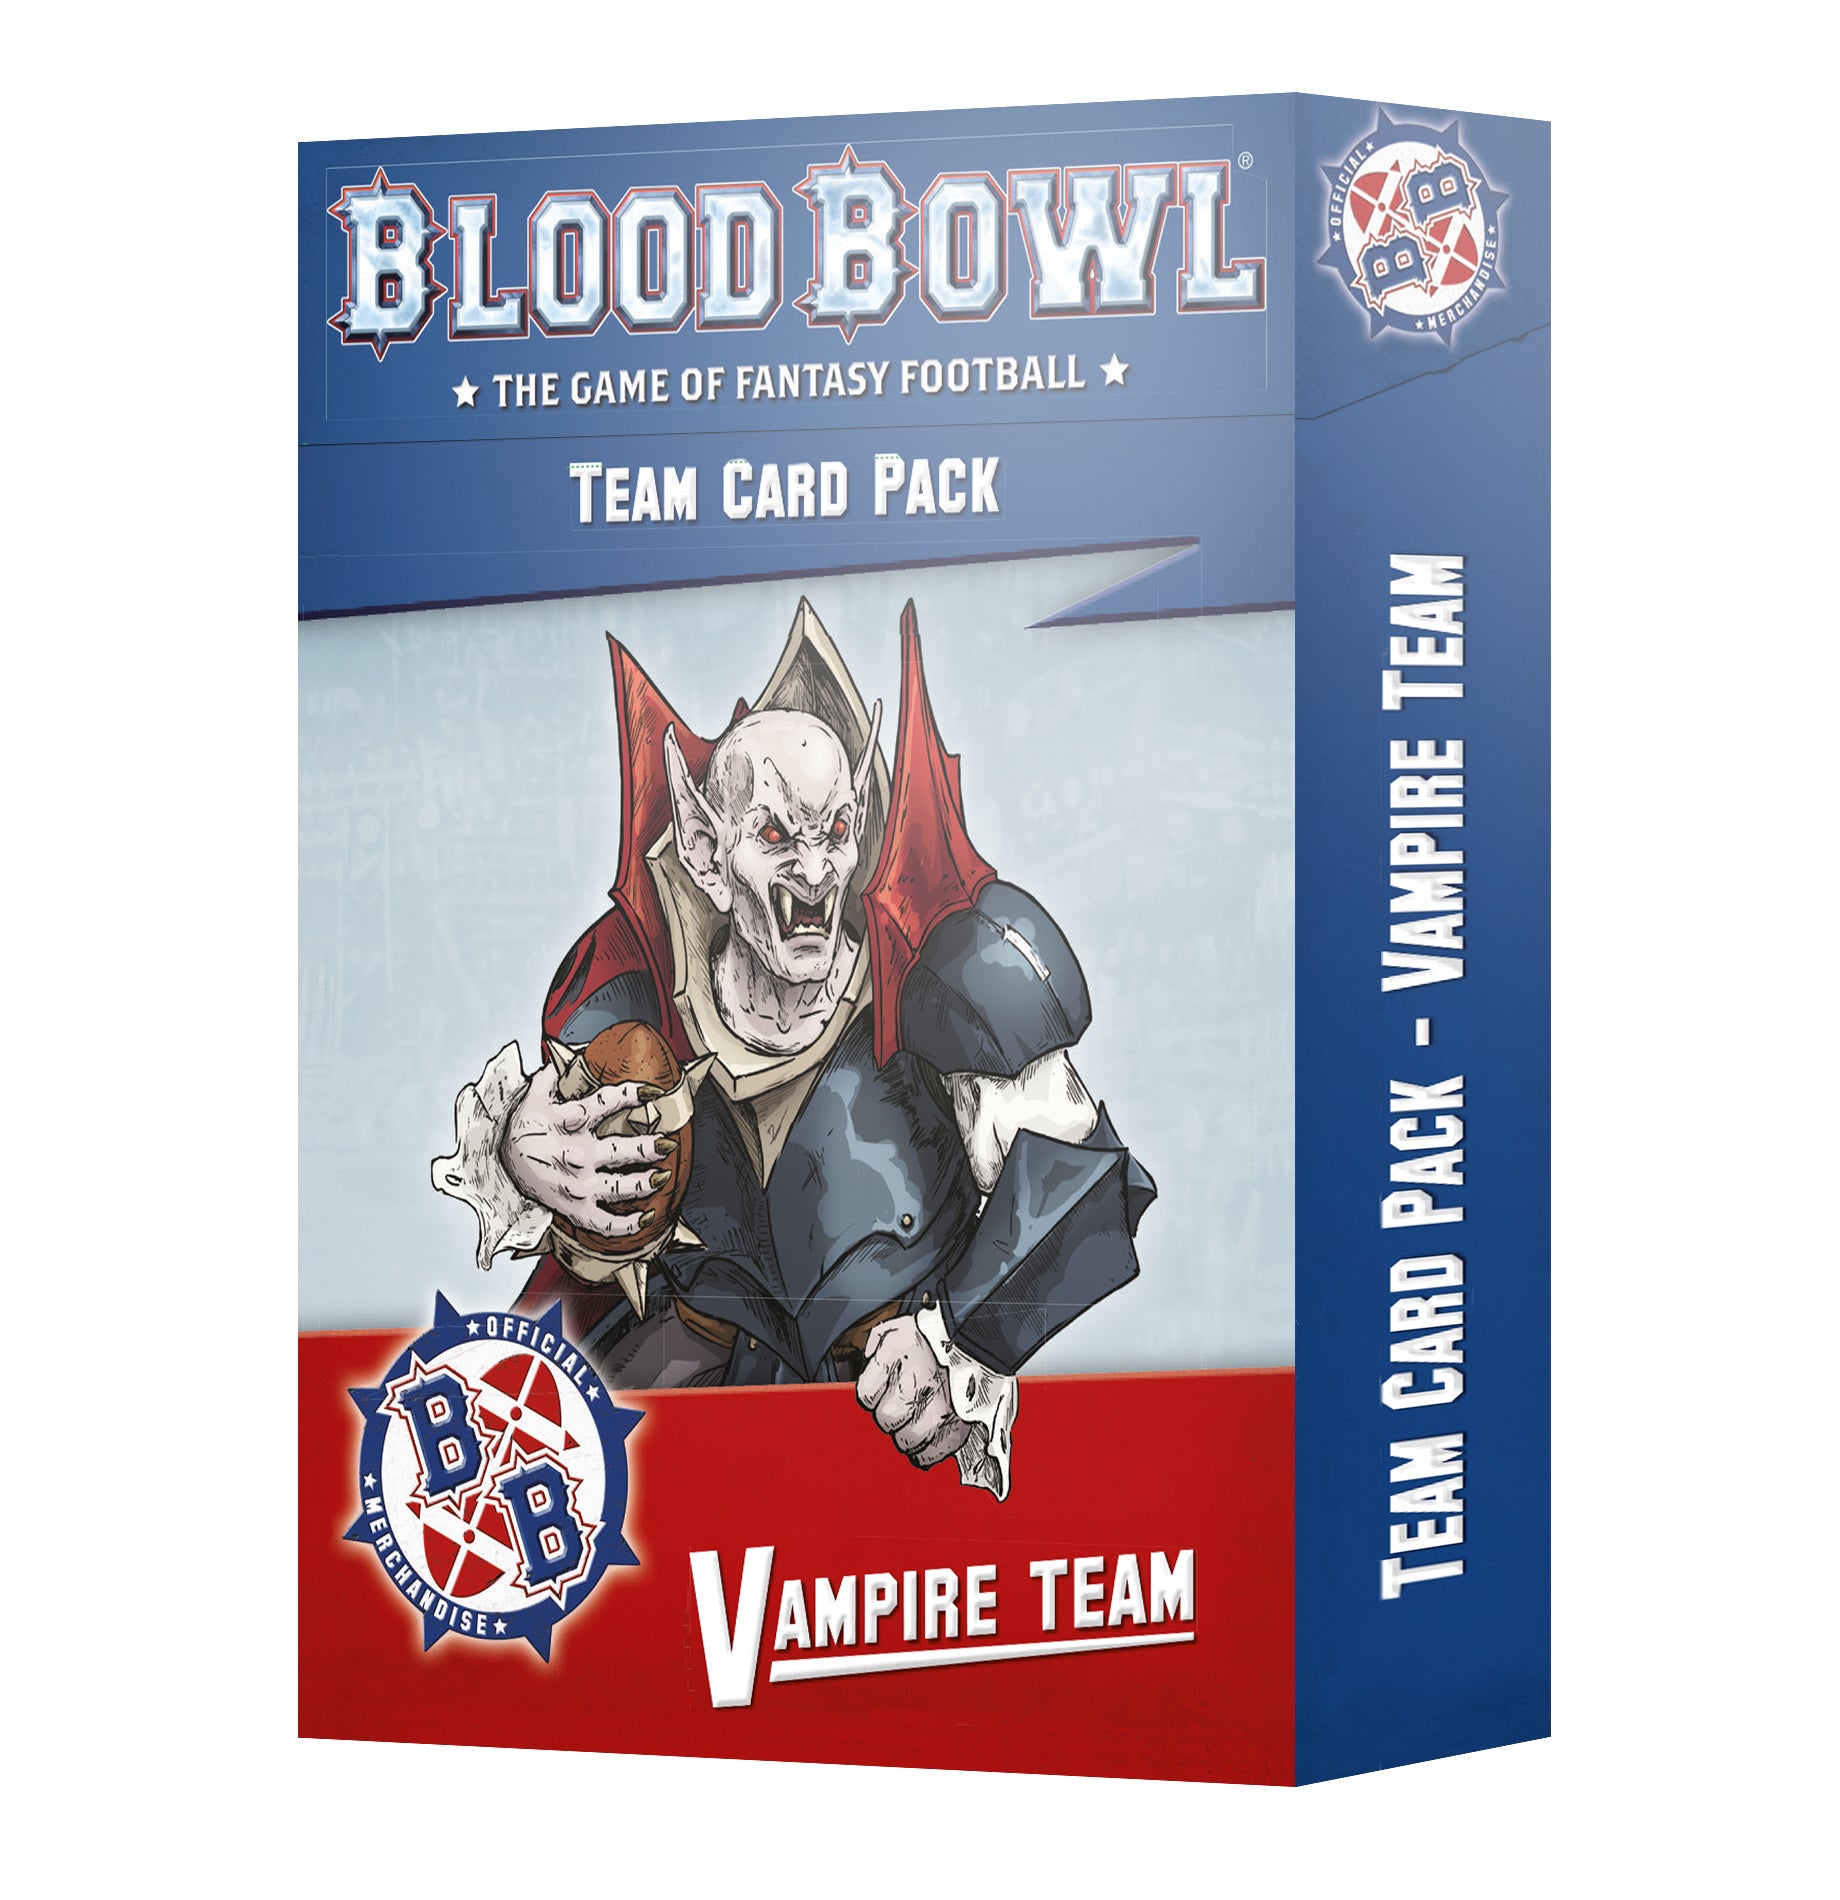 a box of blood bowl team card pack vampire team